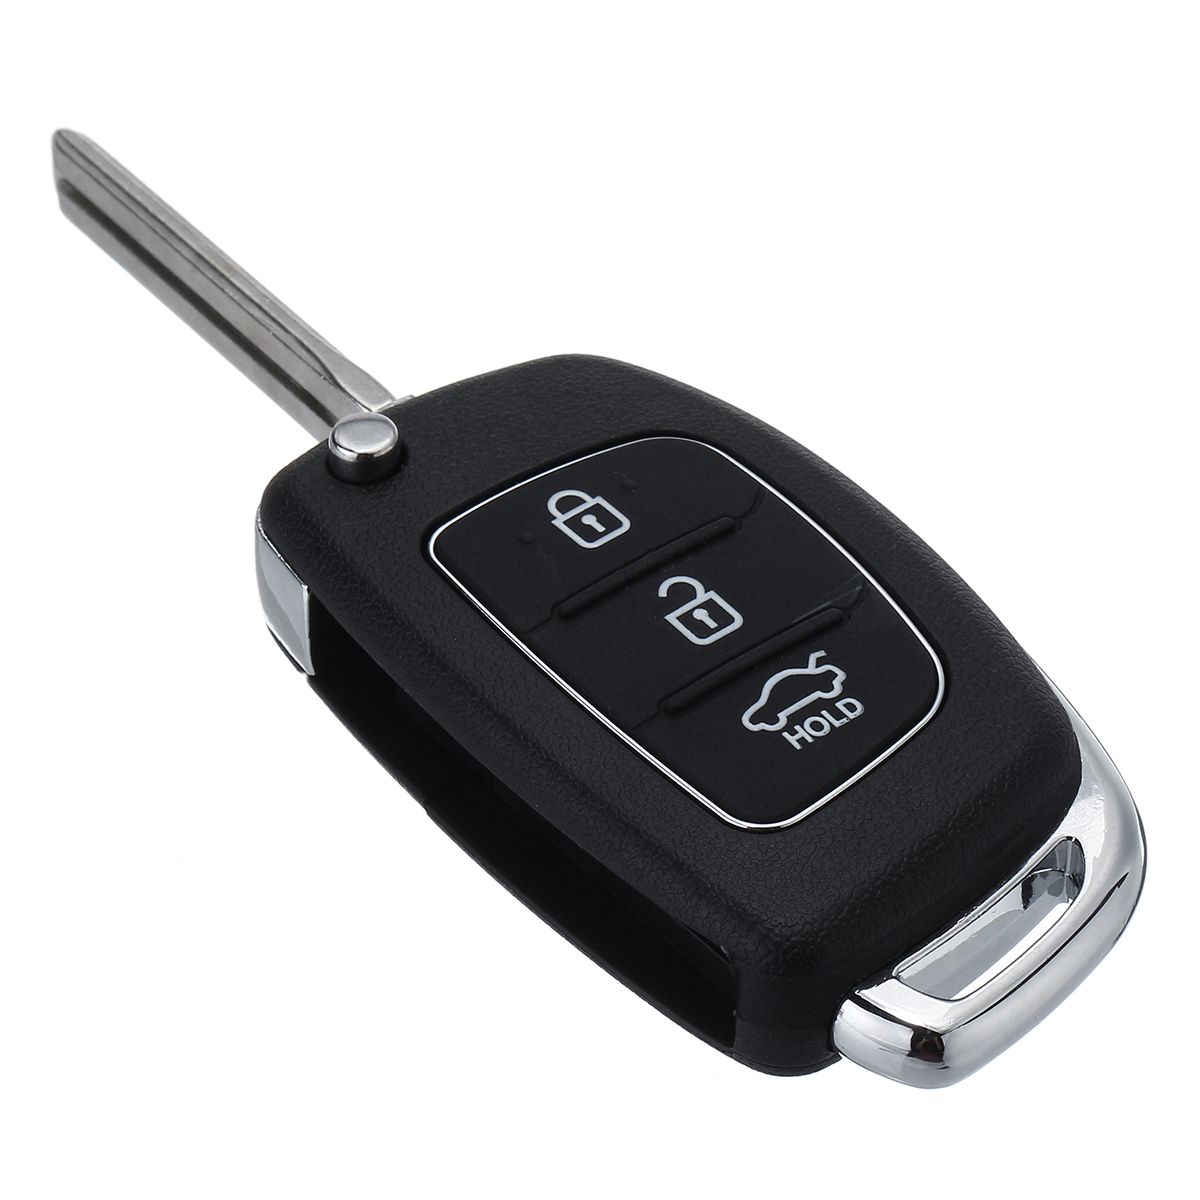 3 Buttons Remote Flip Key Fob Case Shell with Blade Battery for Hyundai Santa Fe IX35 I20 2013-2014